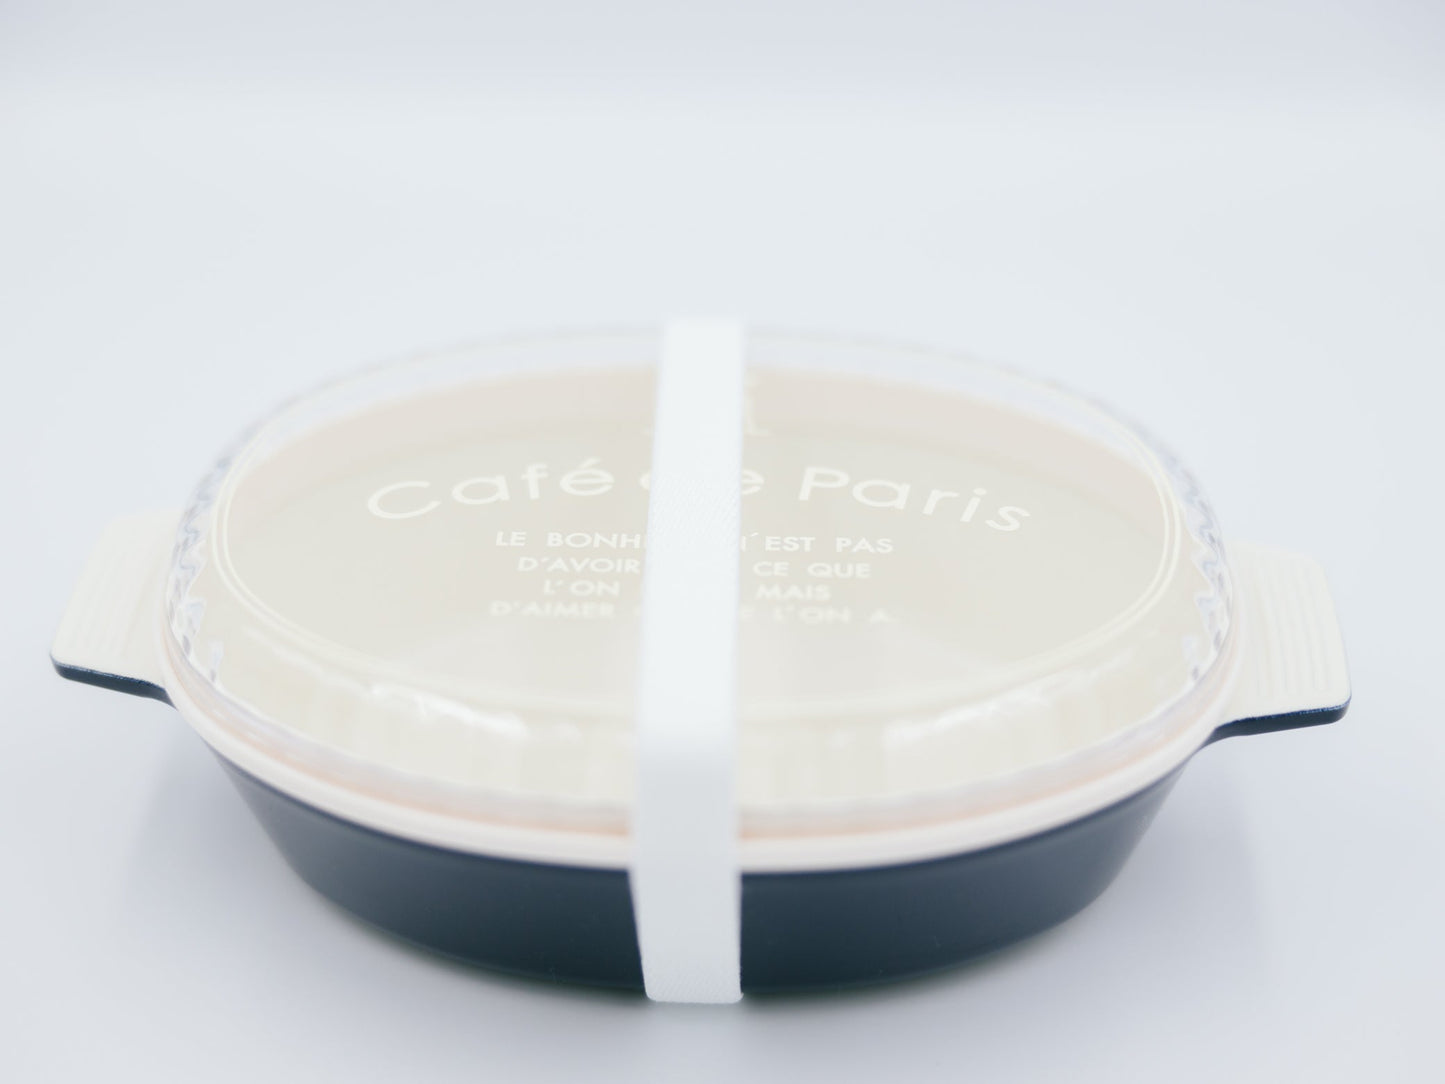 Café de Paris ランチボックス | ネイビー*